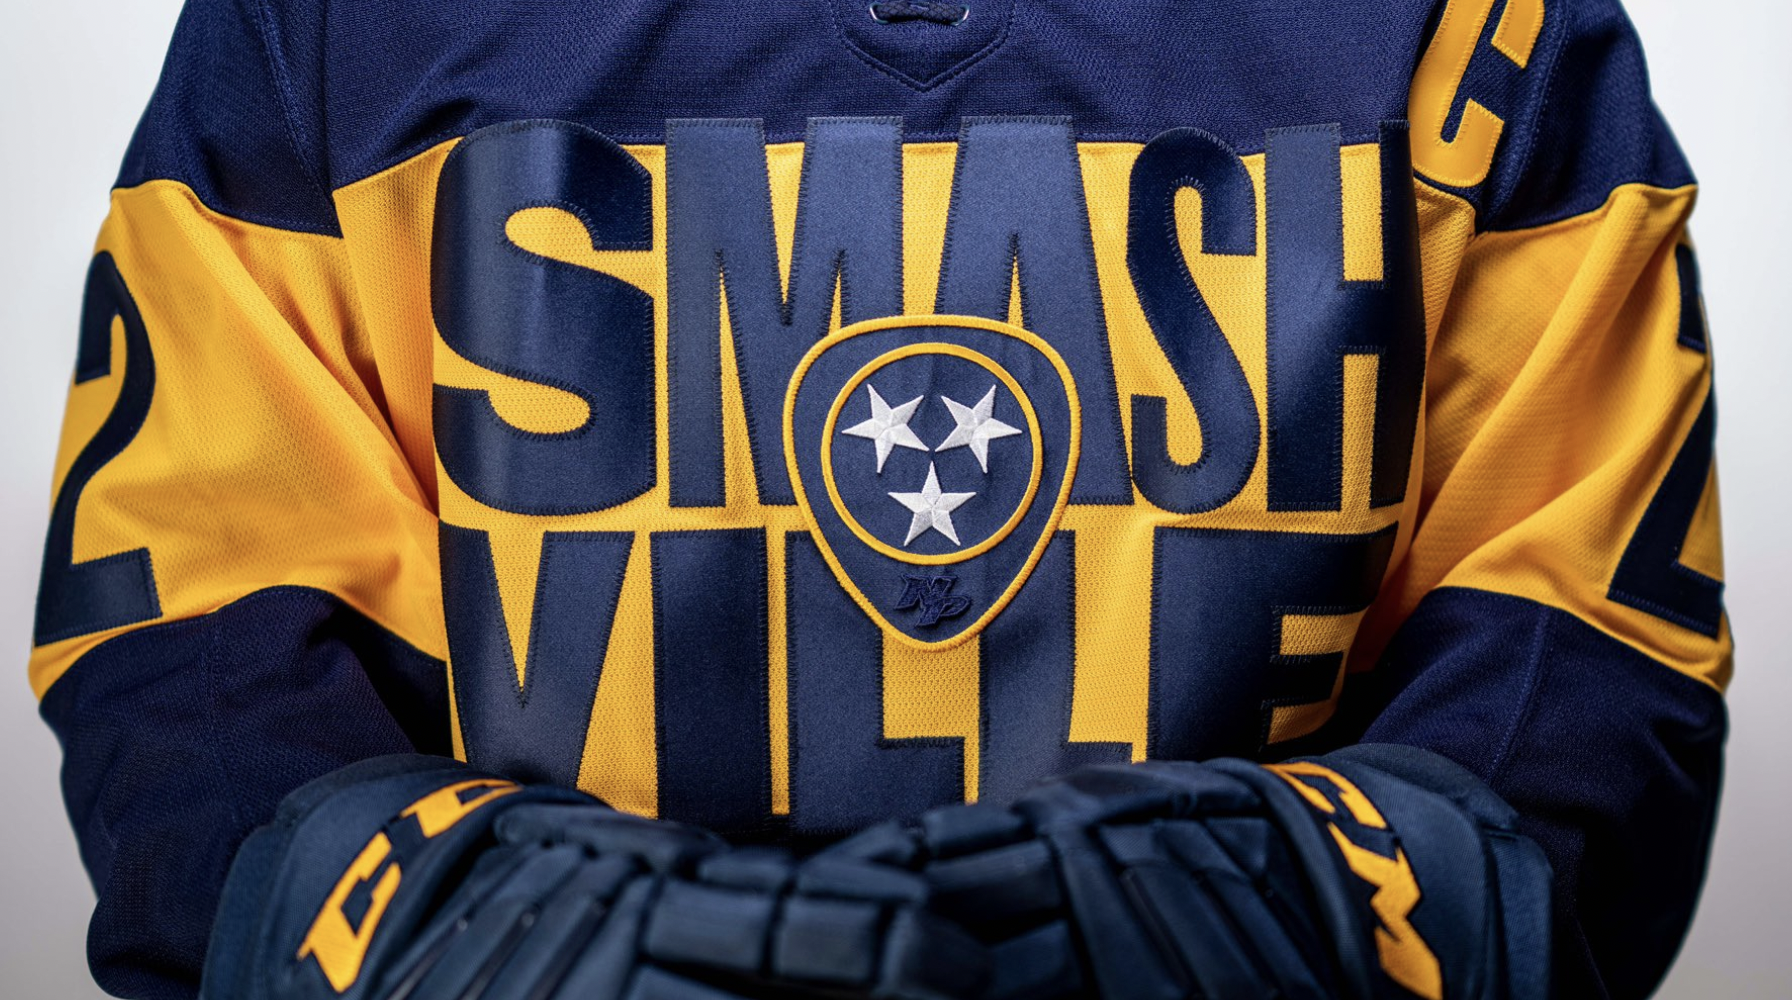 Nashville Predators Stadium Series Jersey Revealed! 